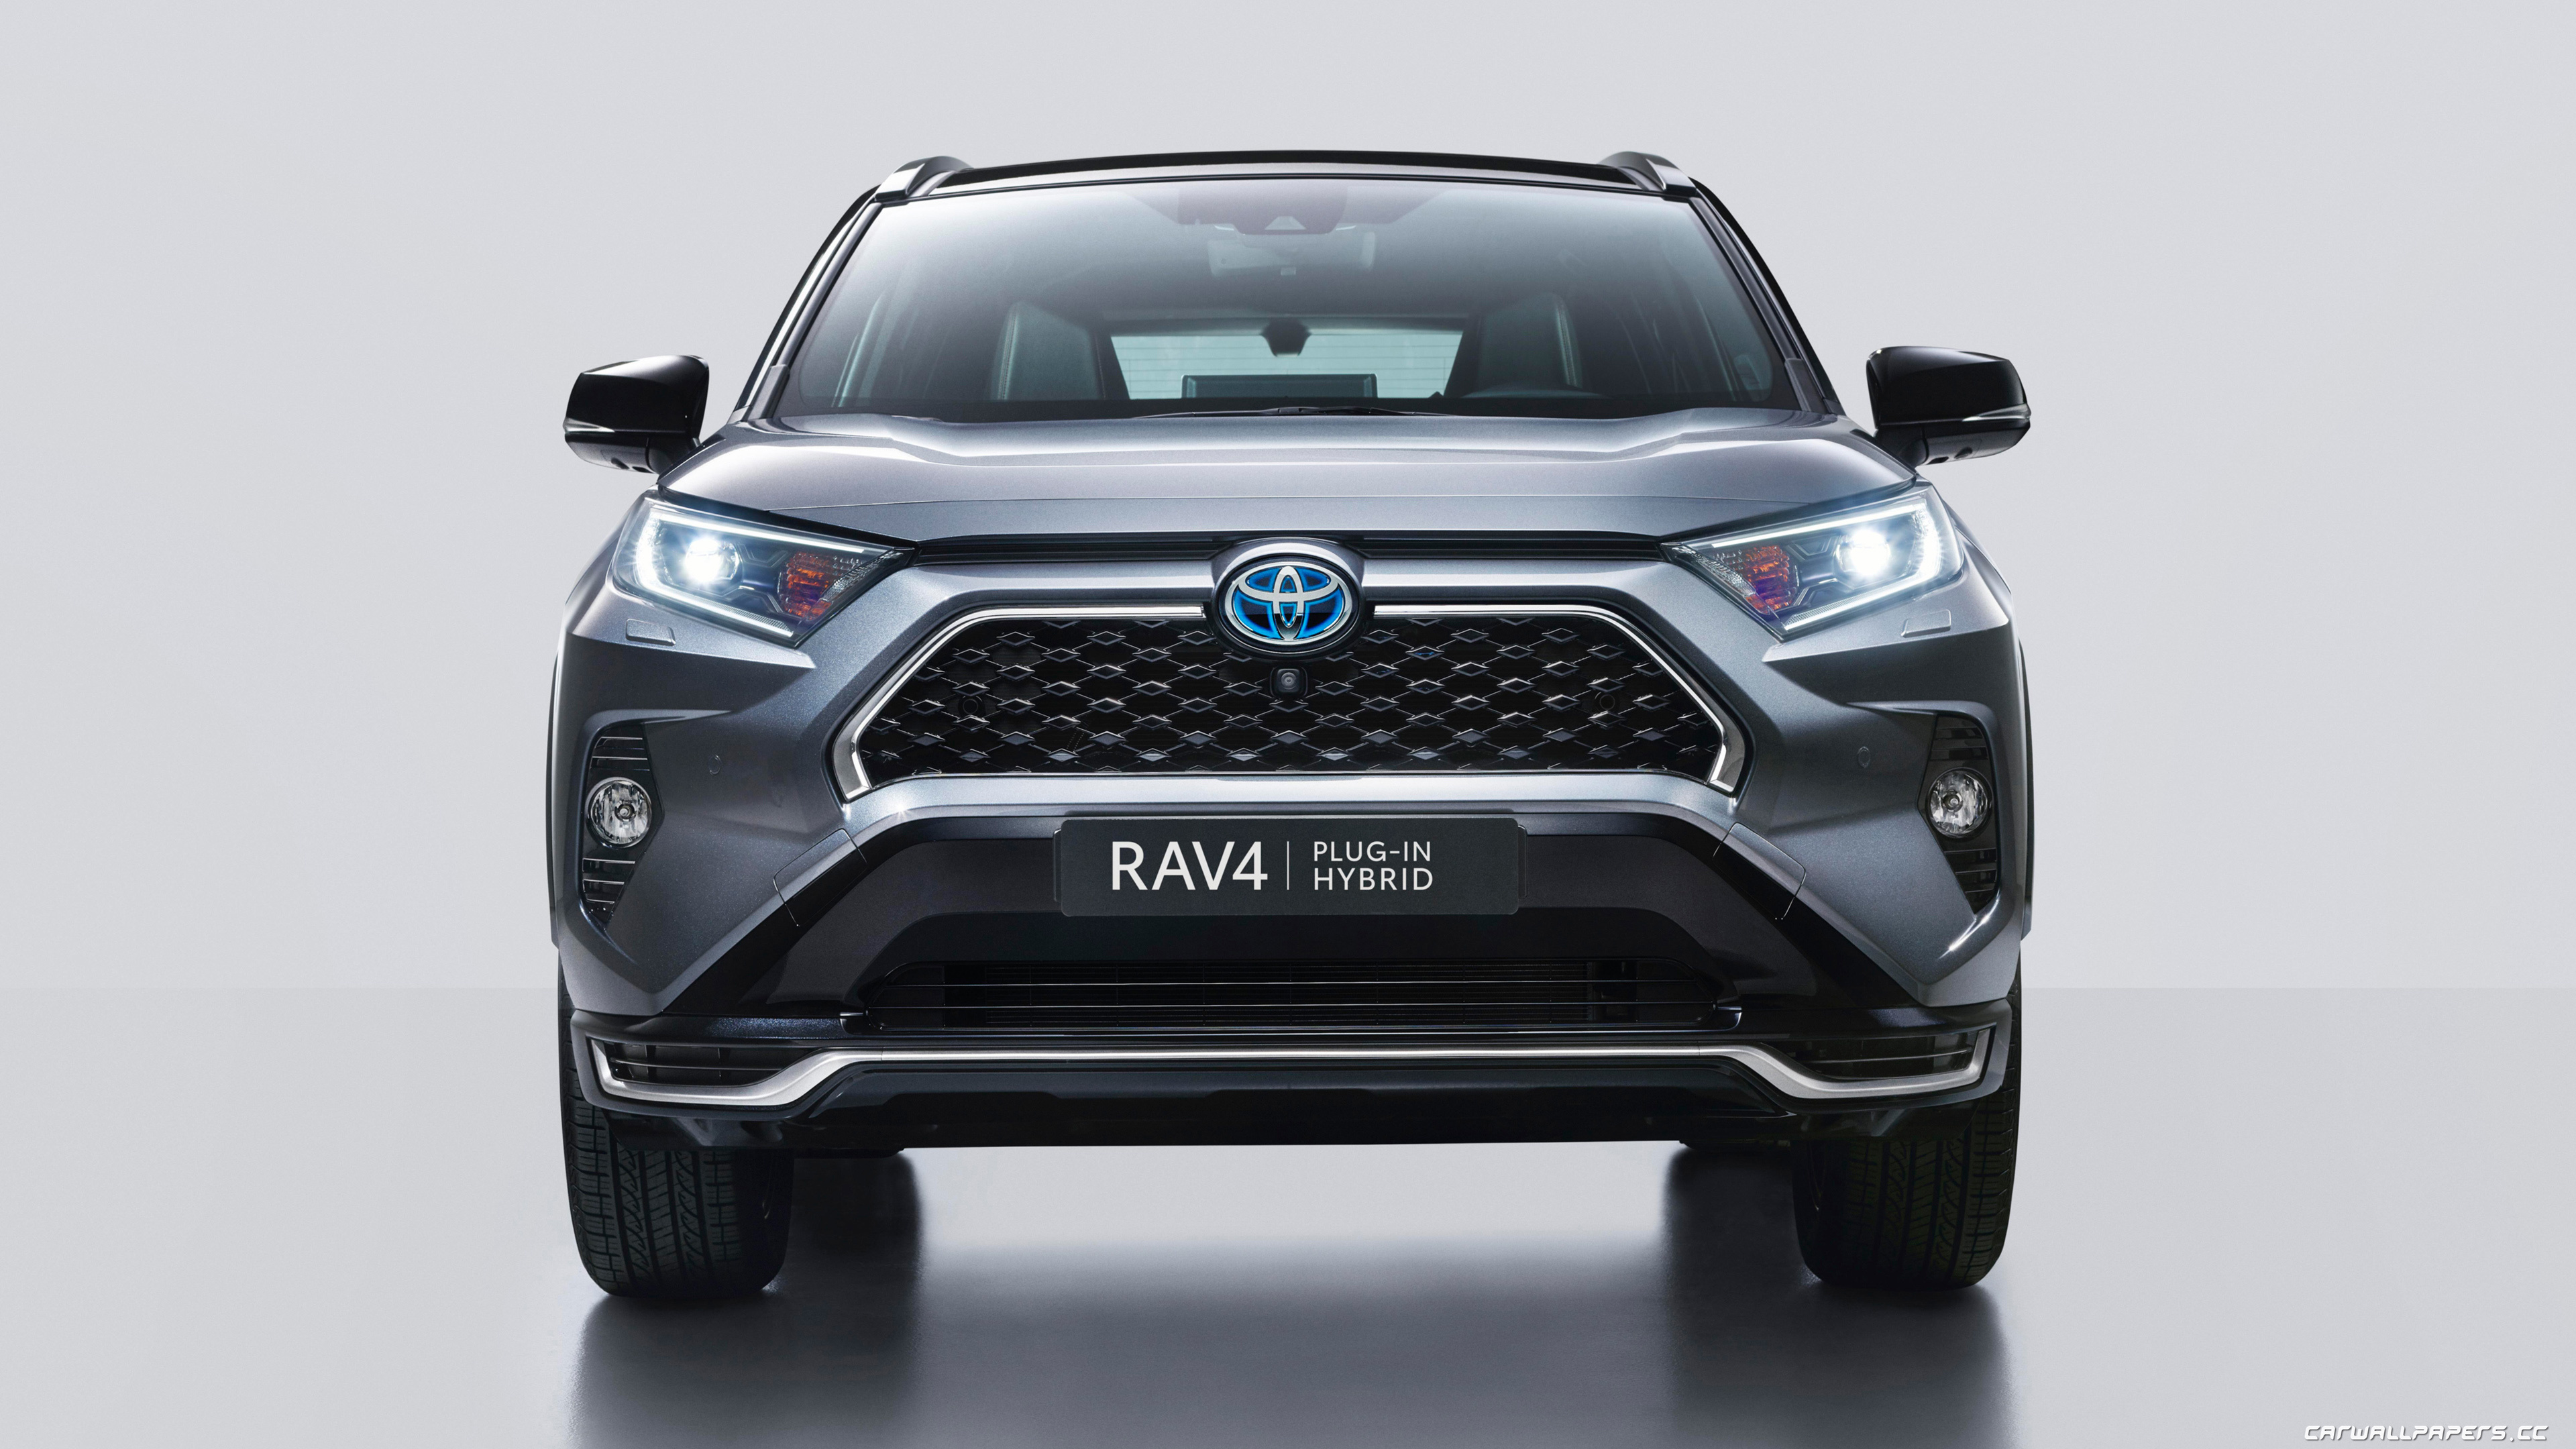 Toyota RAV4, Plug-in hybrid, 2020 model, Environmentally-friendly, 3840x2160 4K Desktop